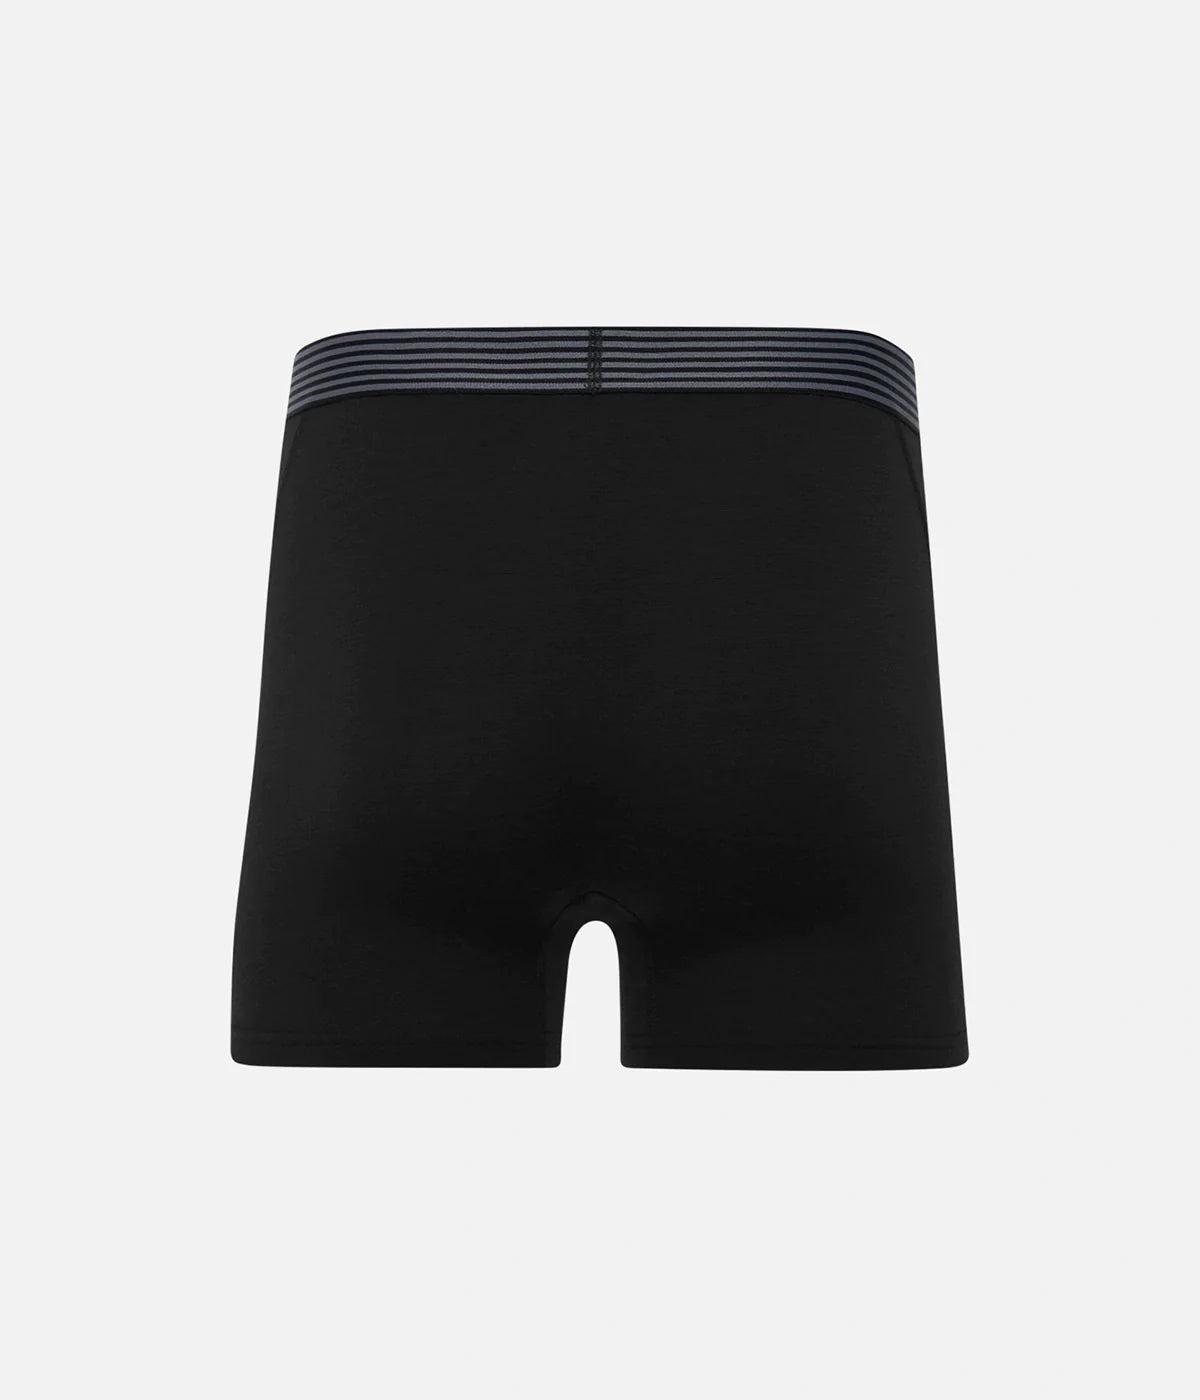 Men's and Women's Underwear, Merino Wool Boxers & Bras